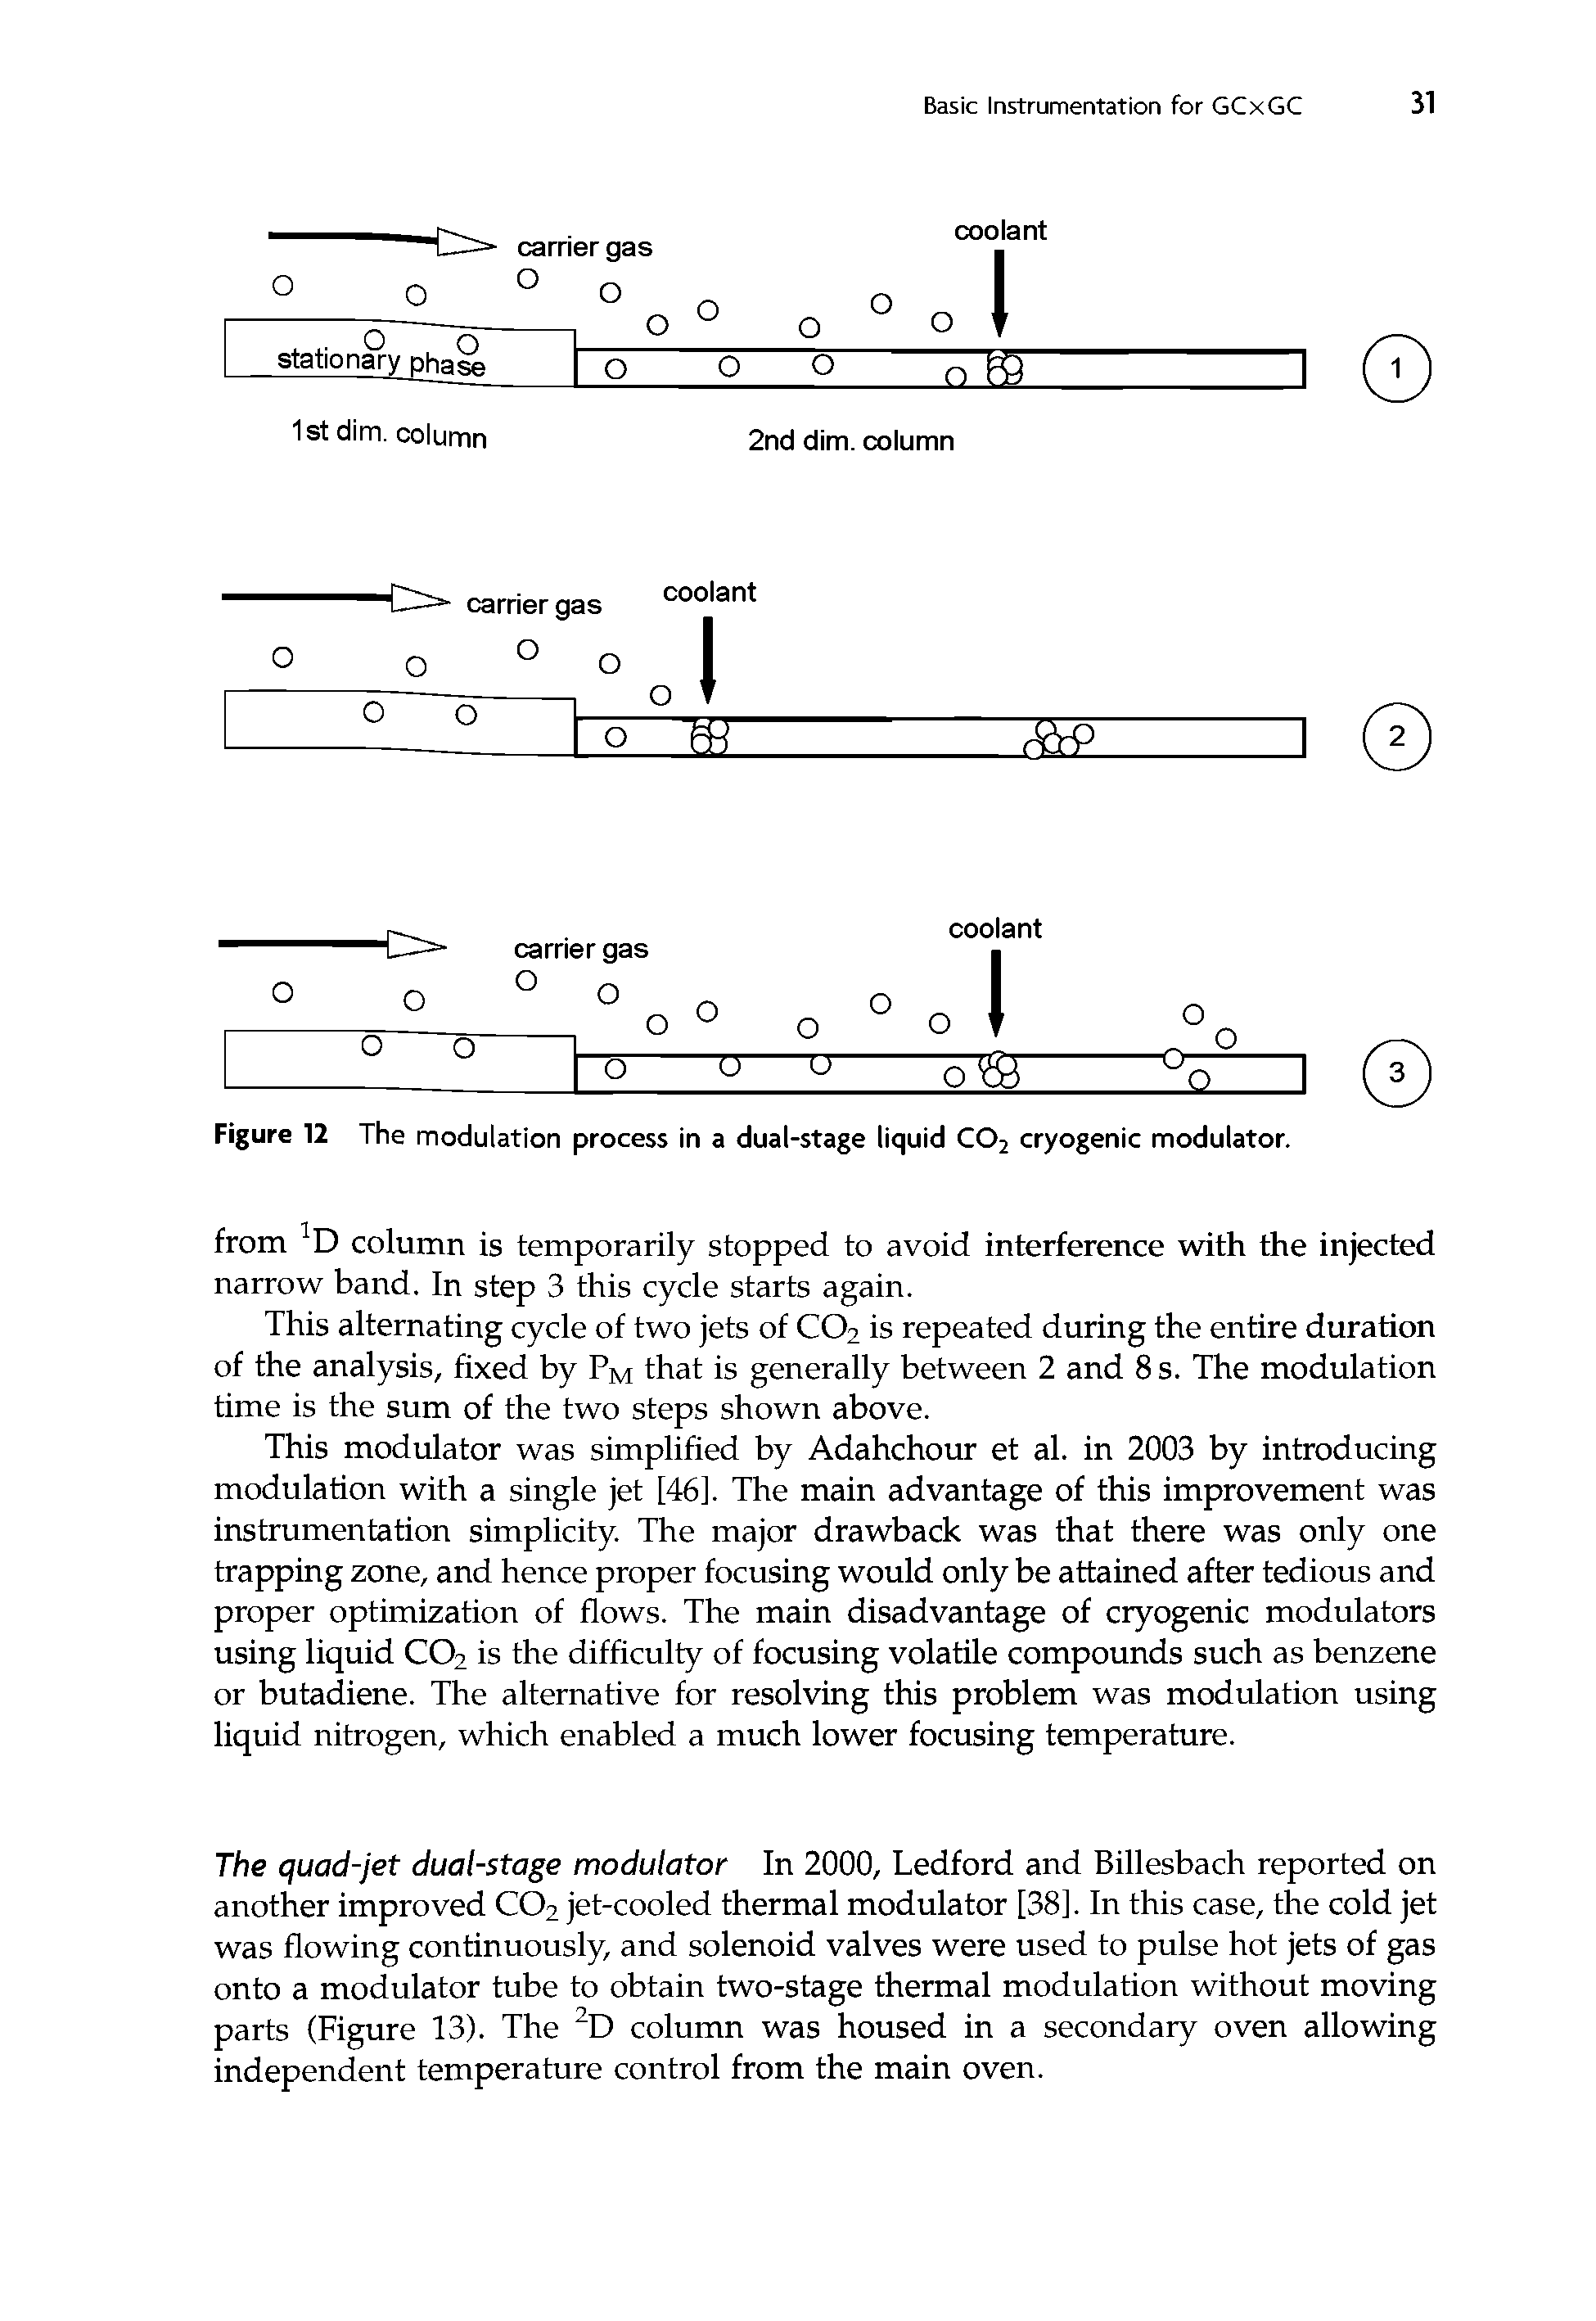 Figure 12 The modulation process in a dual-stage liquid CO2 cryogenic modulator.